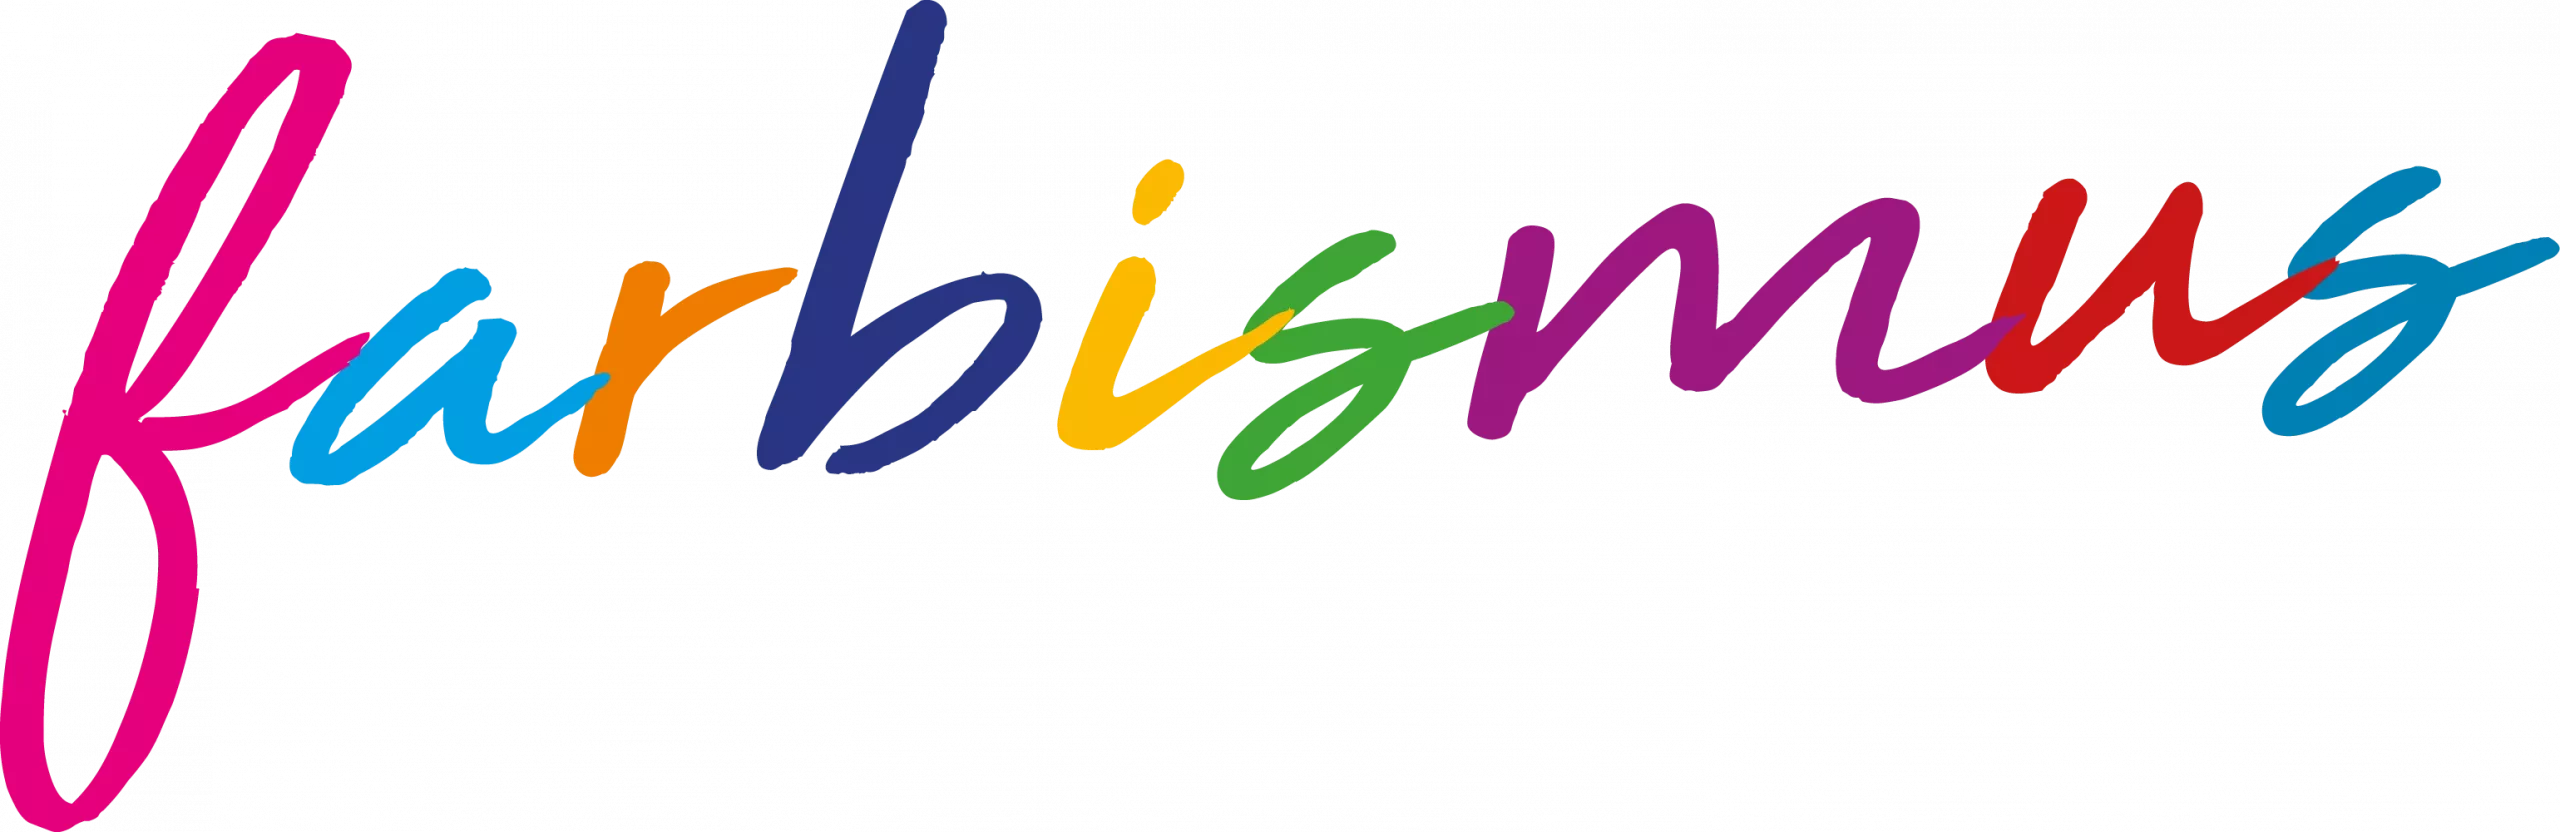 farbismus_logo